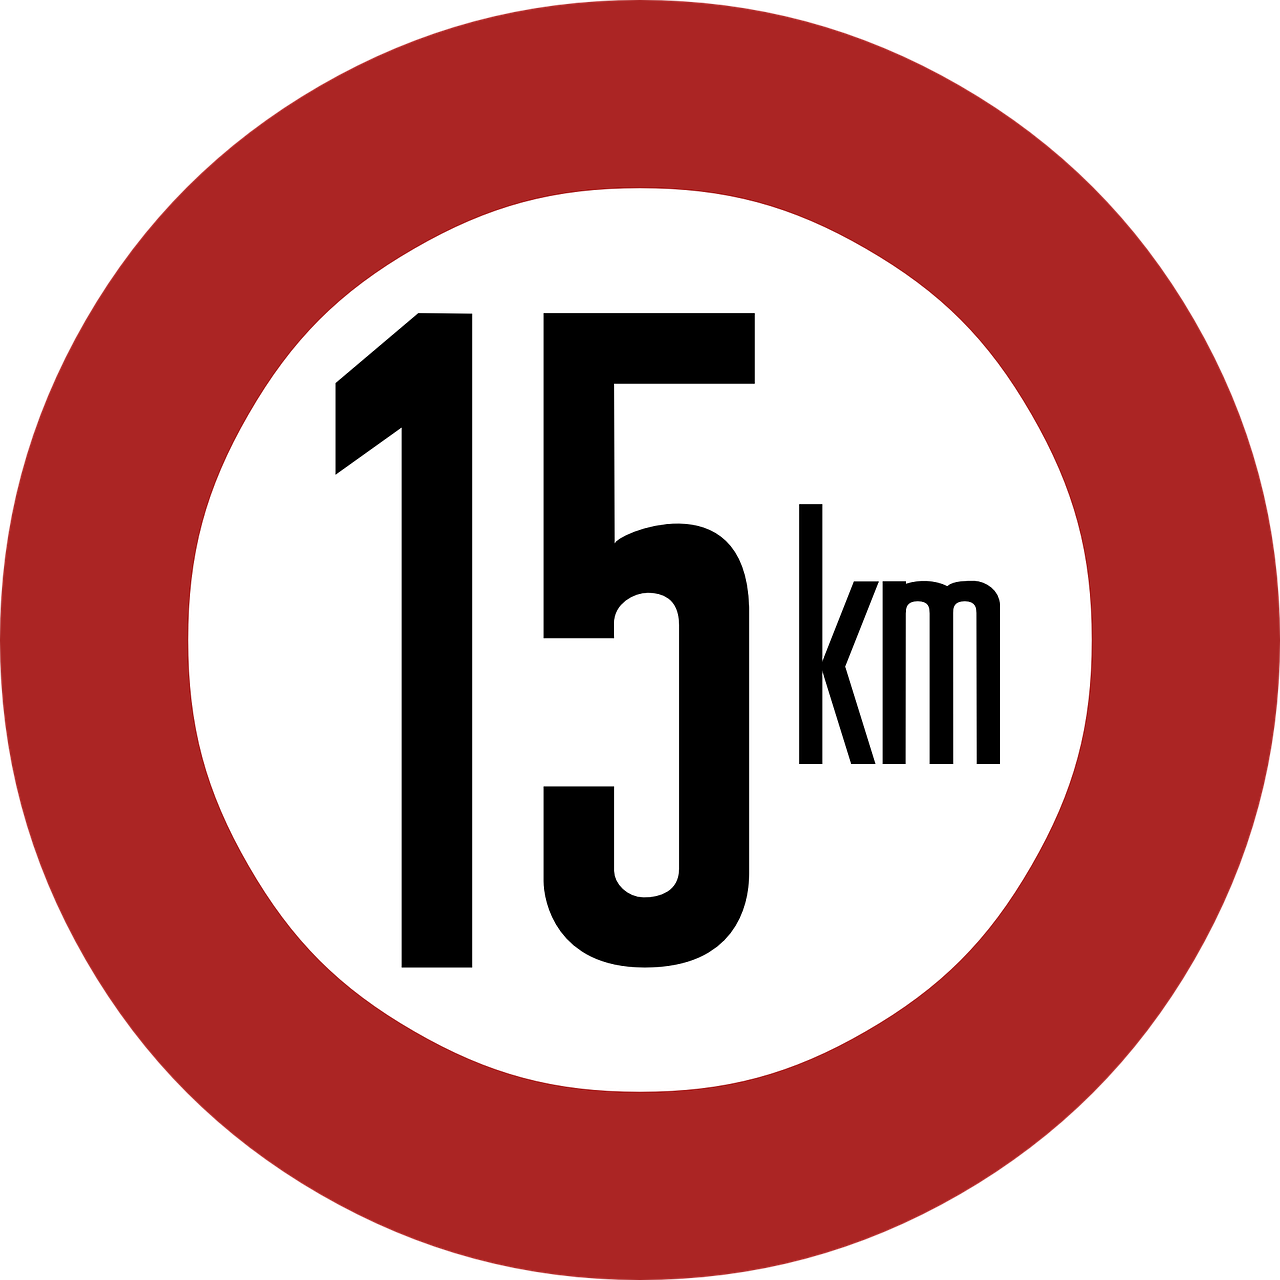 speed limit 15 km sign free photo